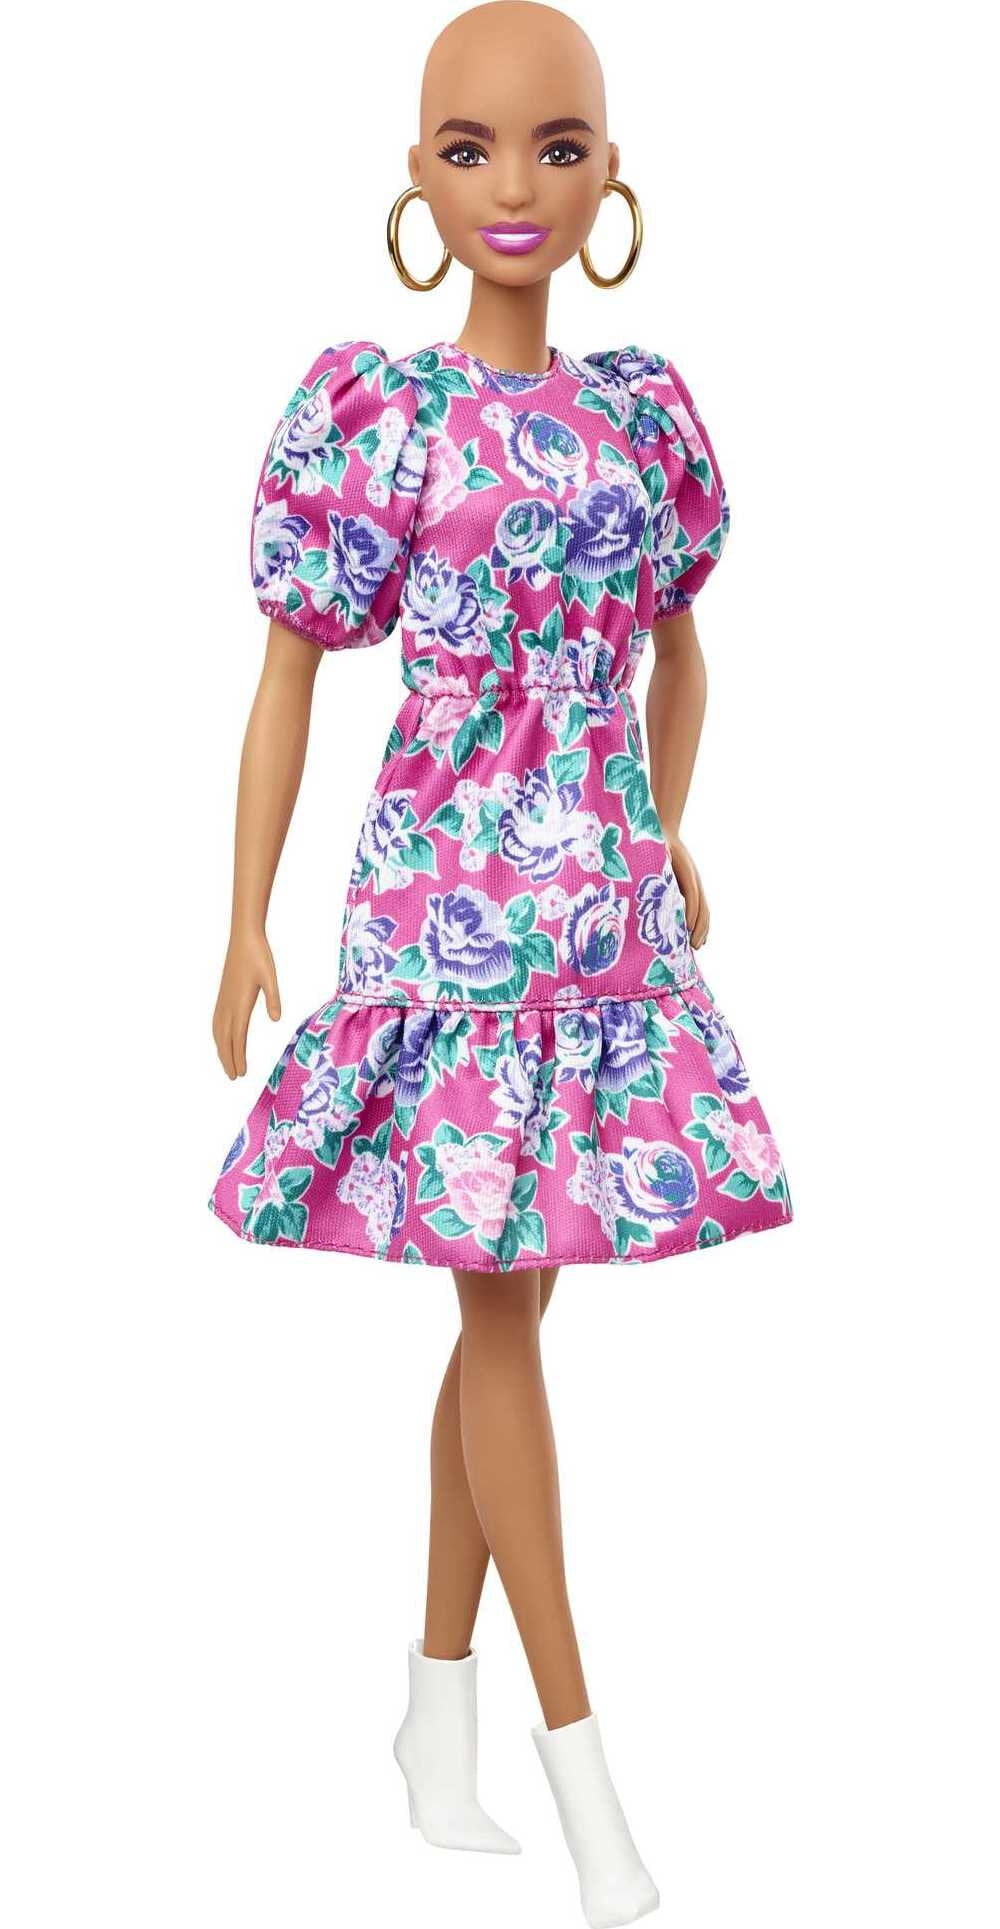 korrekt hungersnød Soak Barbie Fashionistas Doll #150 with No-Hair Look Wearing Pink Floral Dress -  Walmart.com